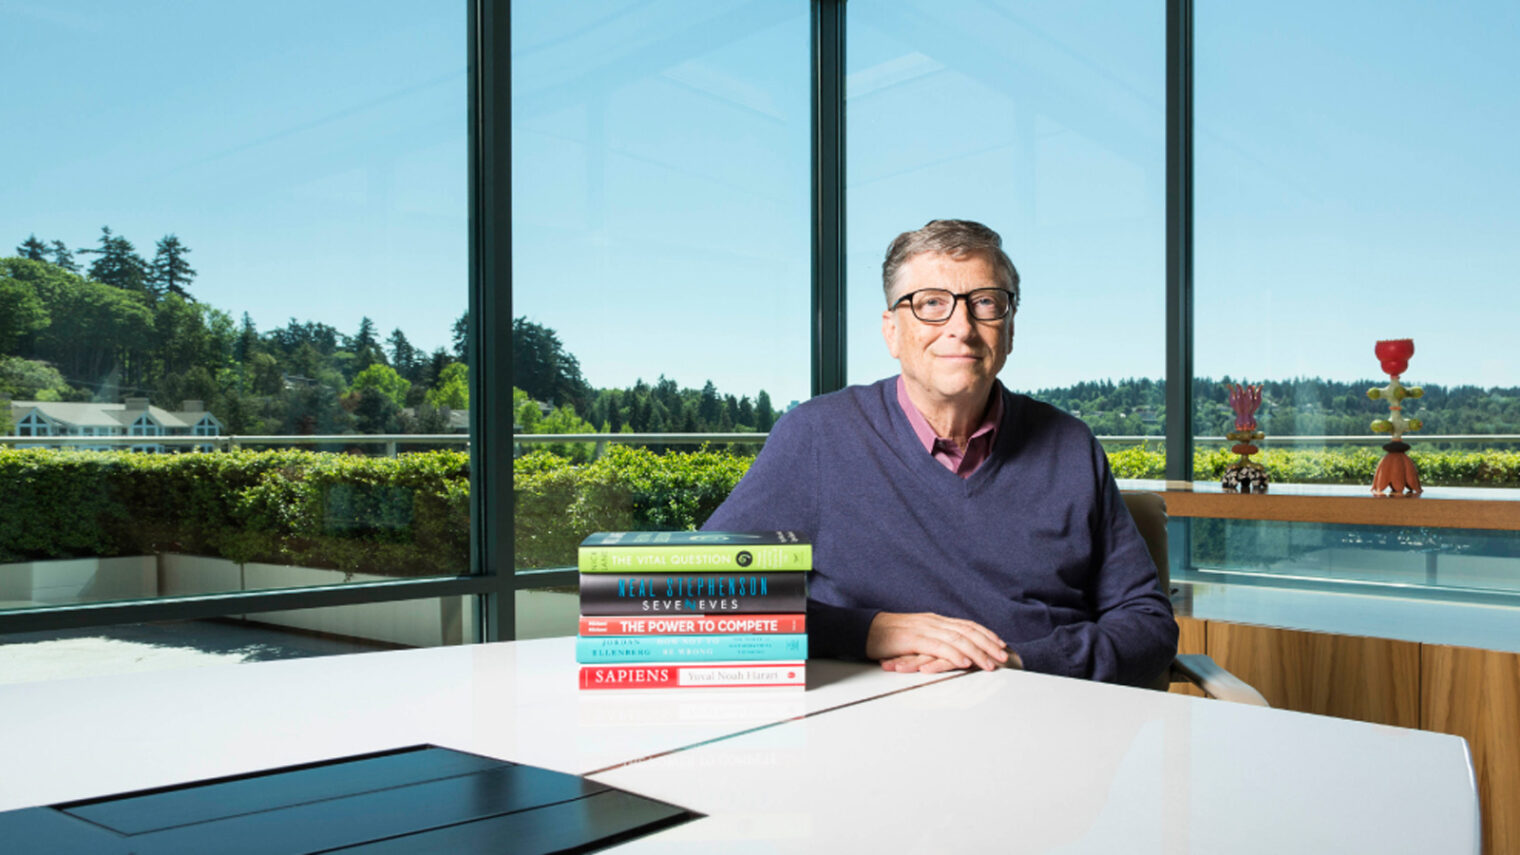 Image of Bill Gates via Gates Notes blog